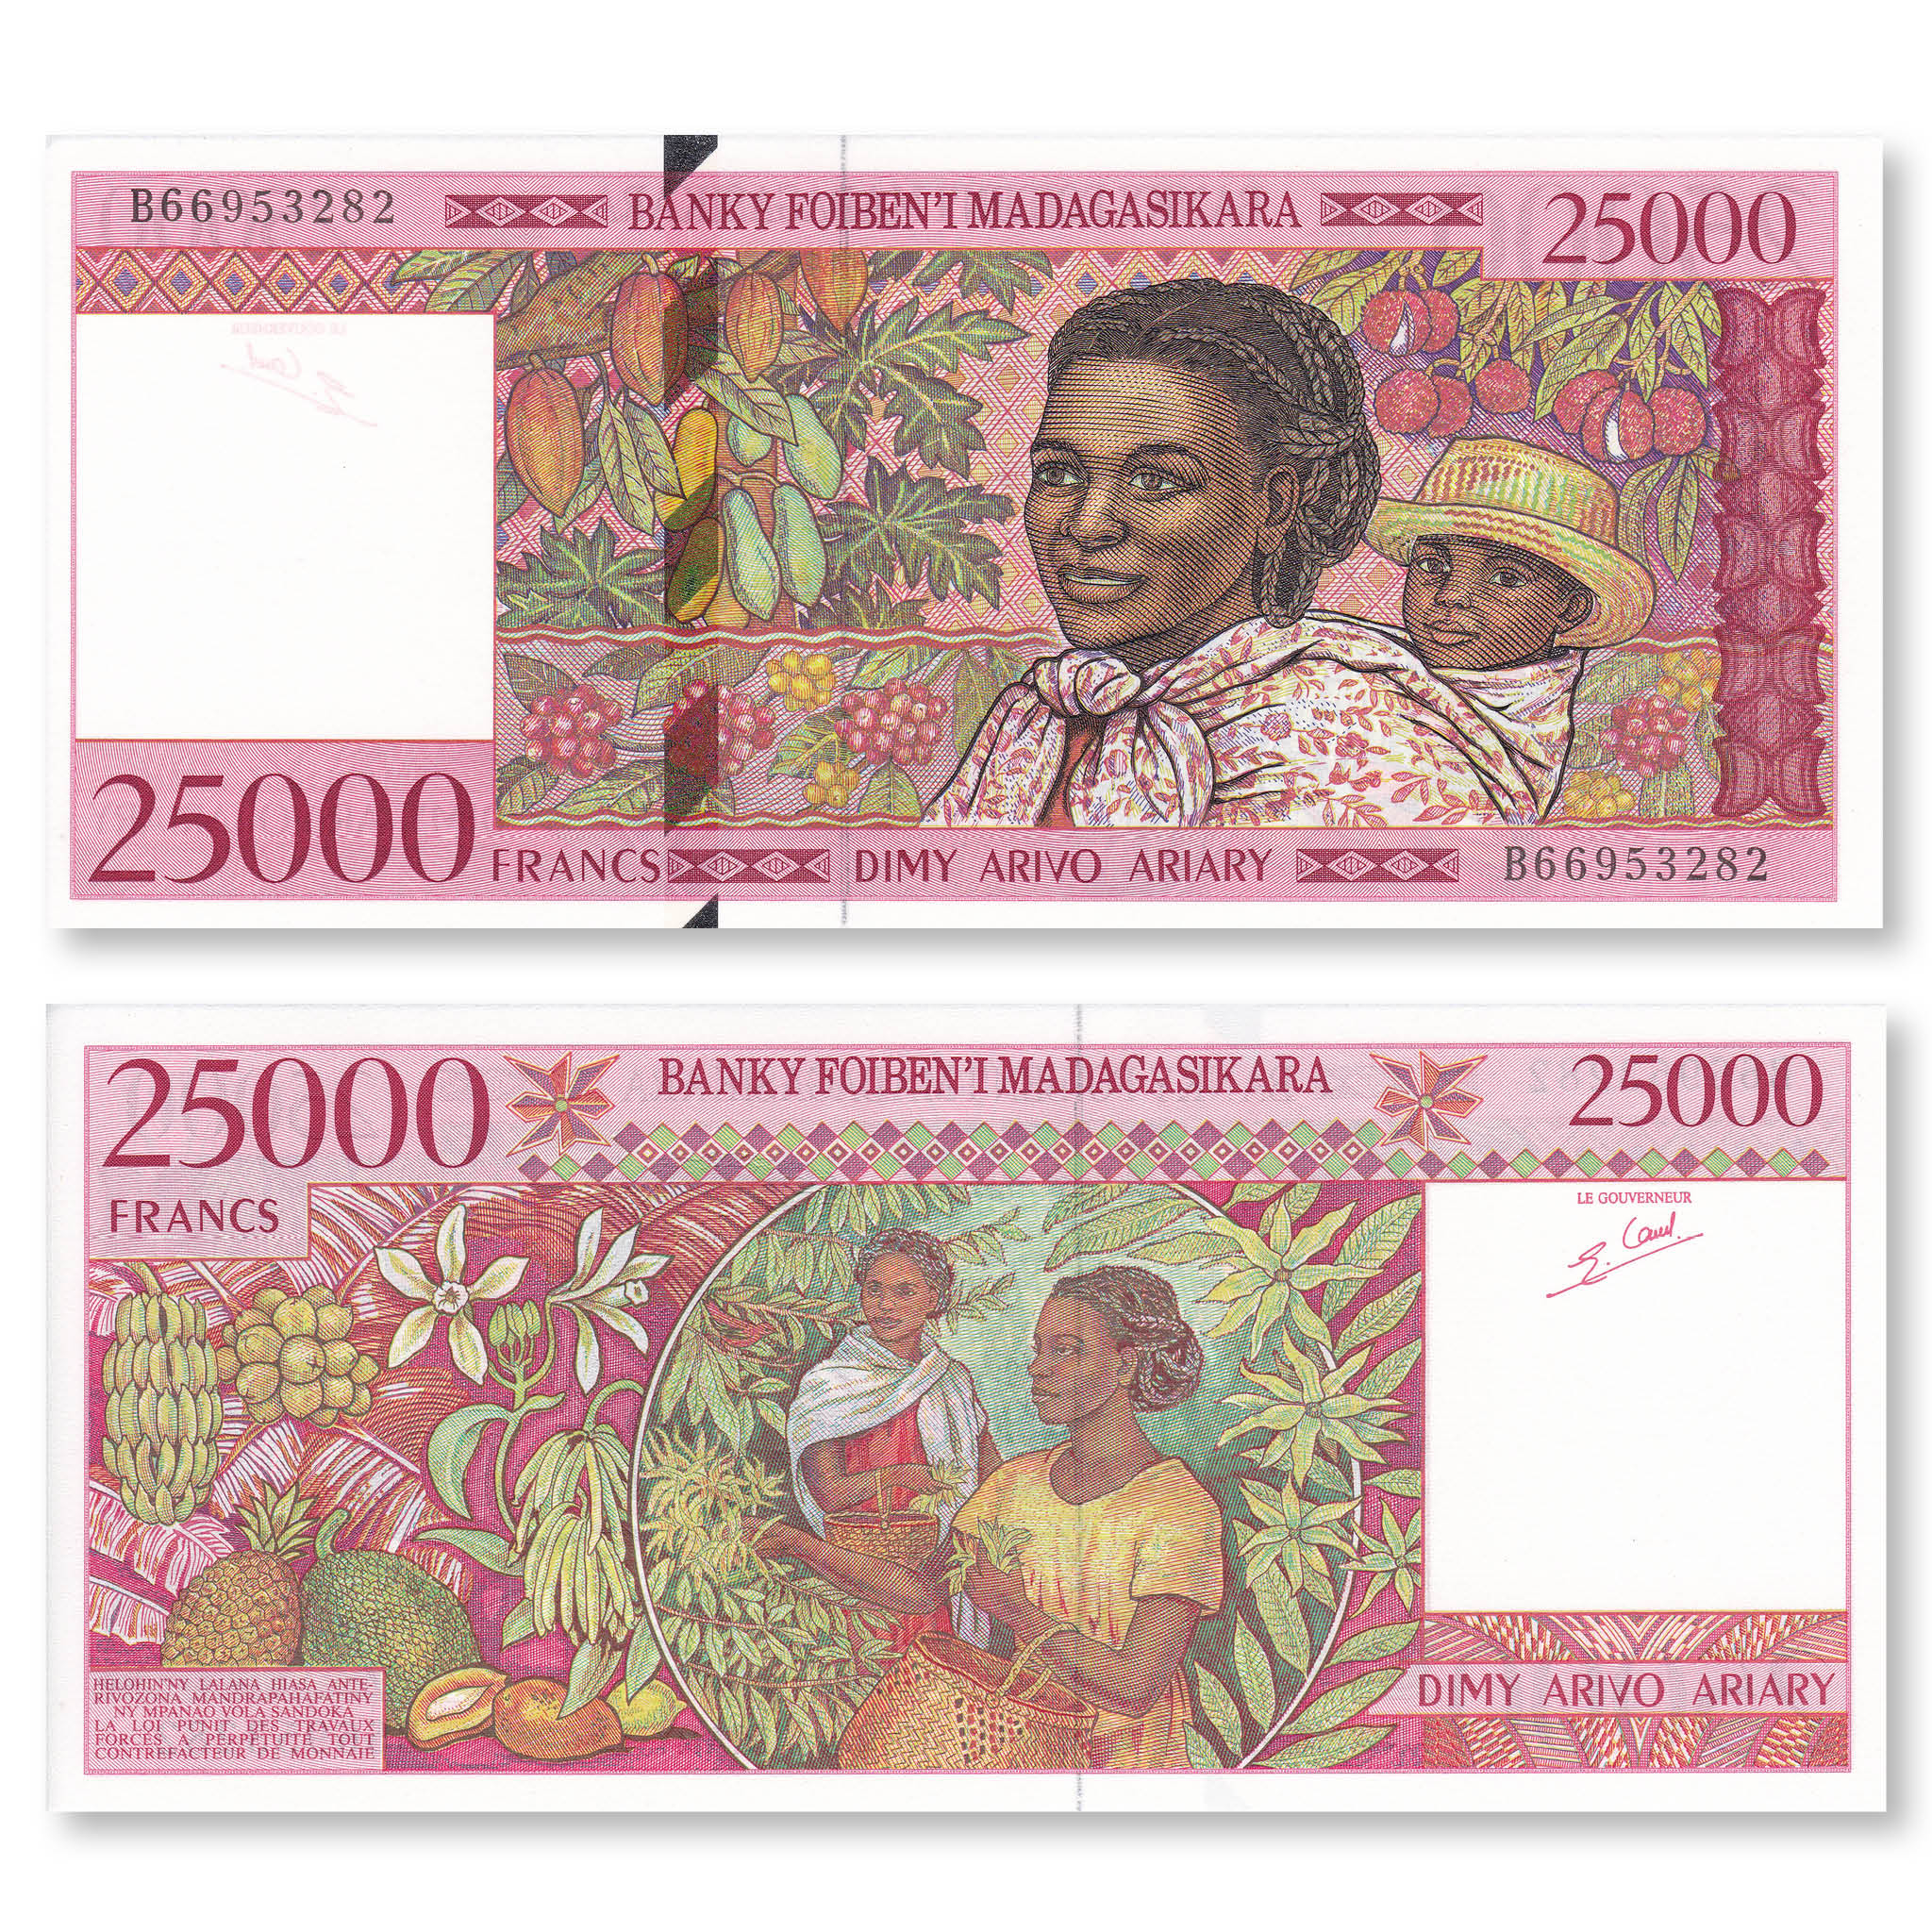 Madagascar 25000 Francs, 1998, B316a, P82, UNC - Robert's World Money - World Banknotes